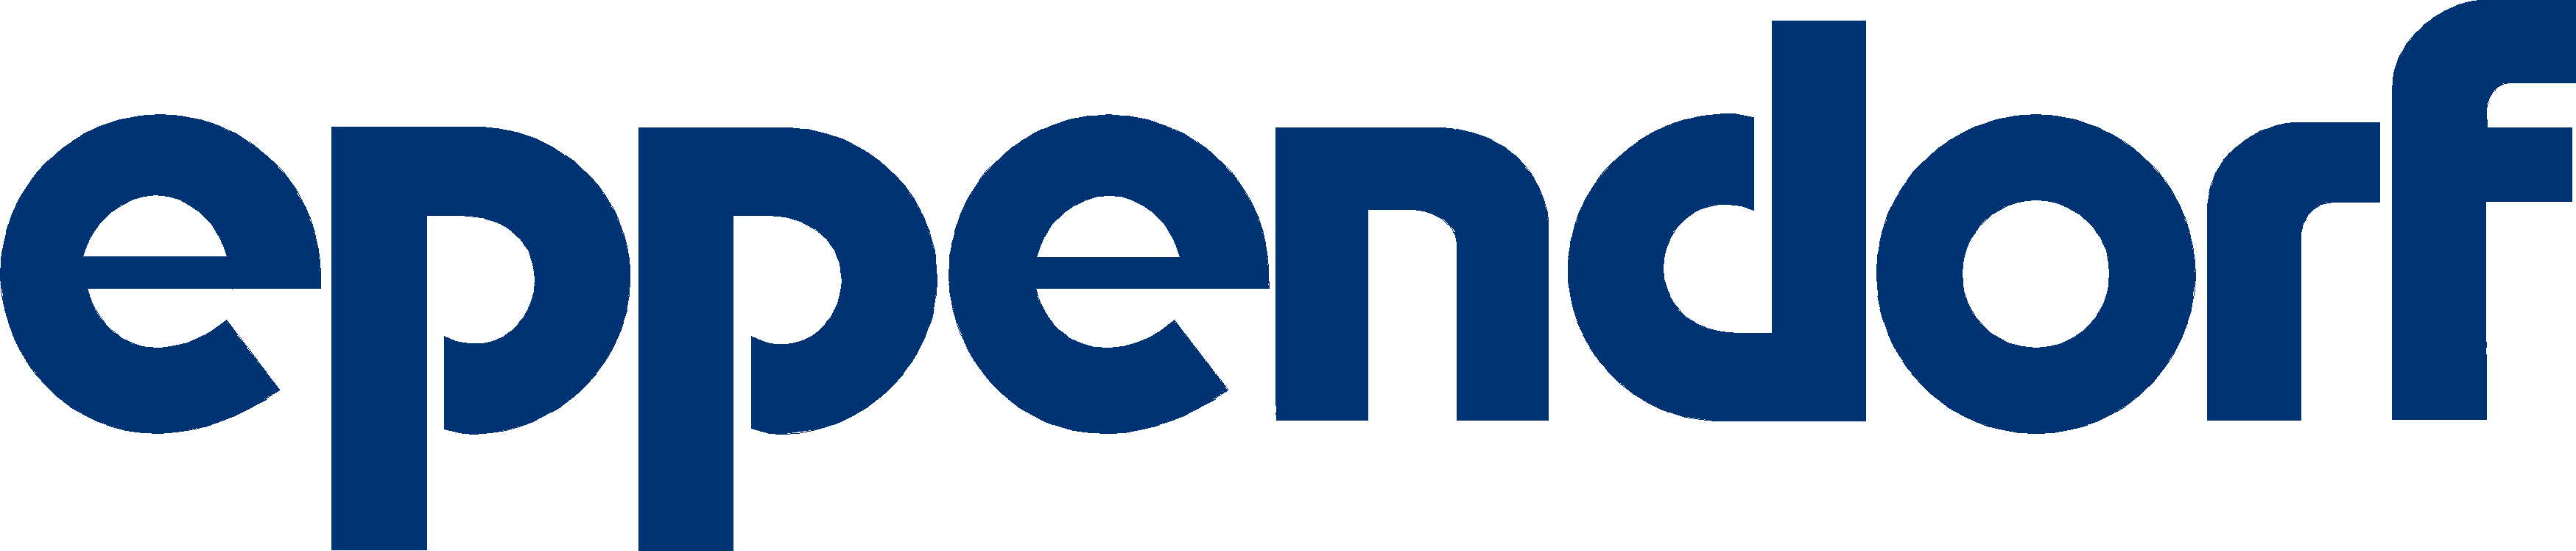 logo-eppendorf